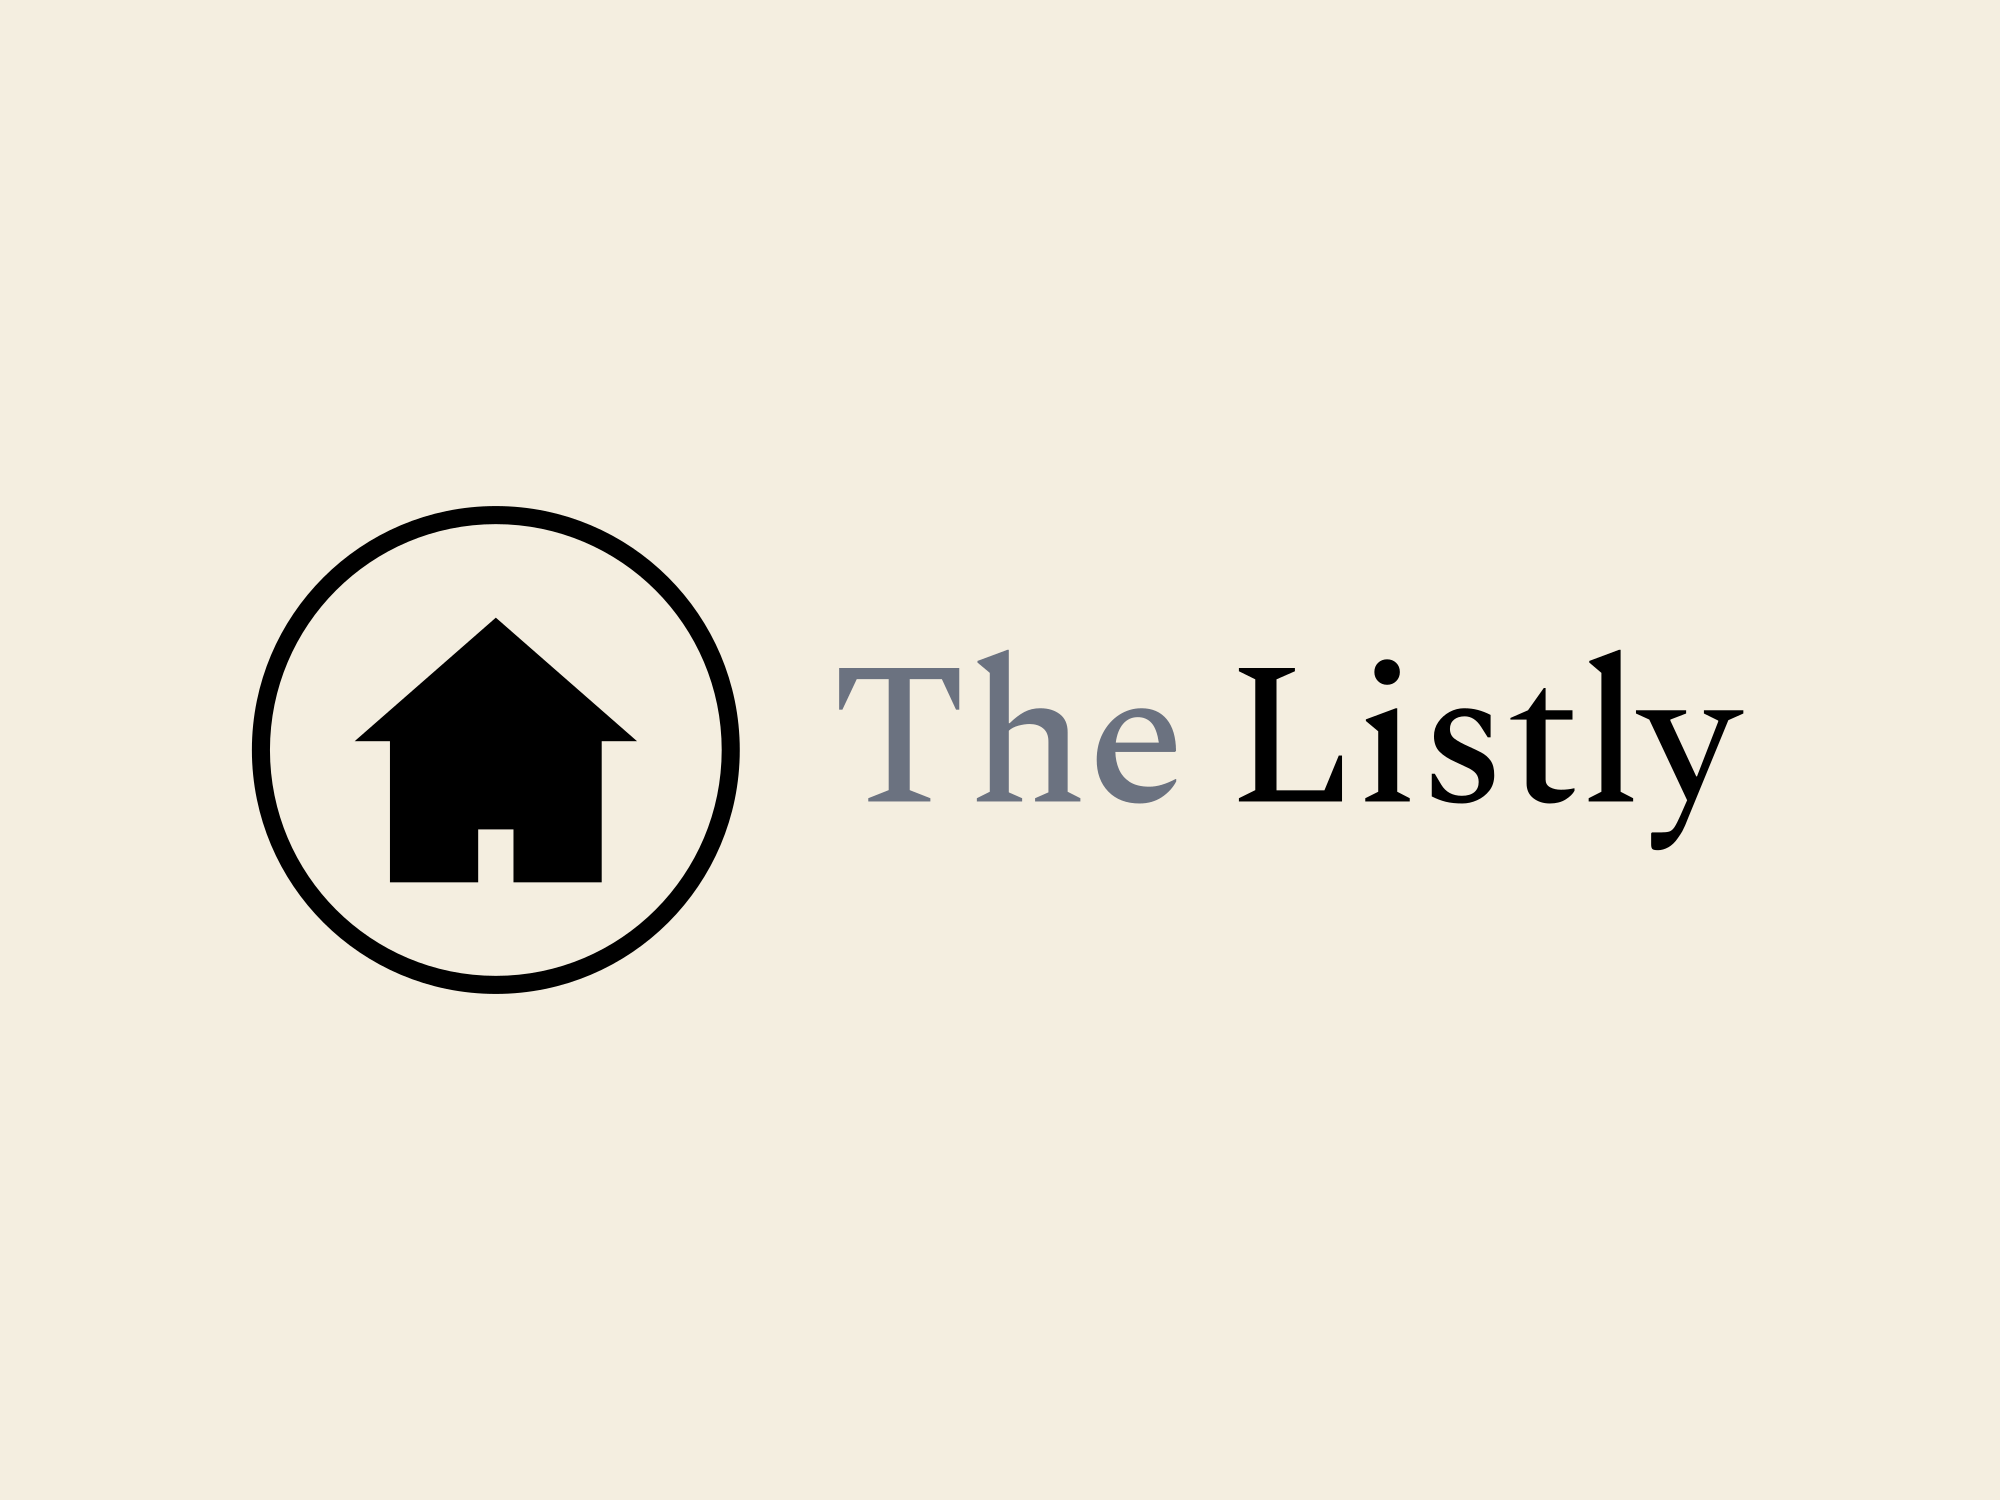 The Listly logo